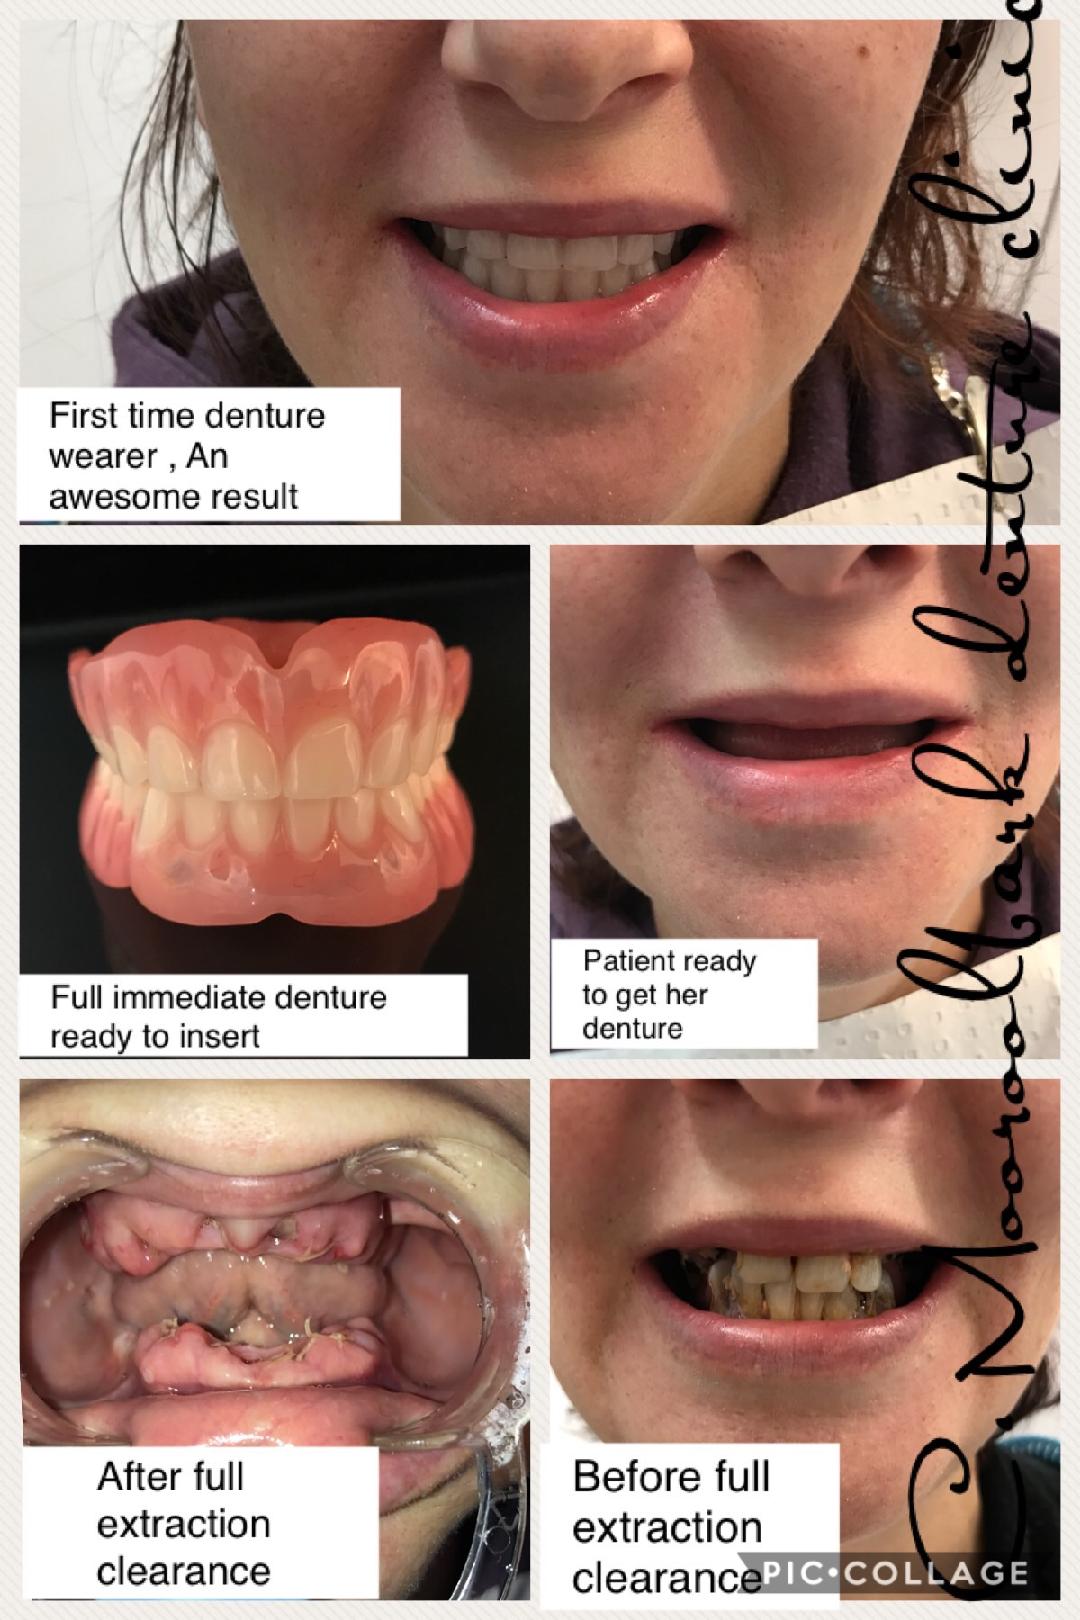 Immediate denture